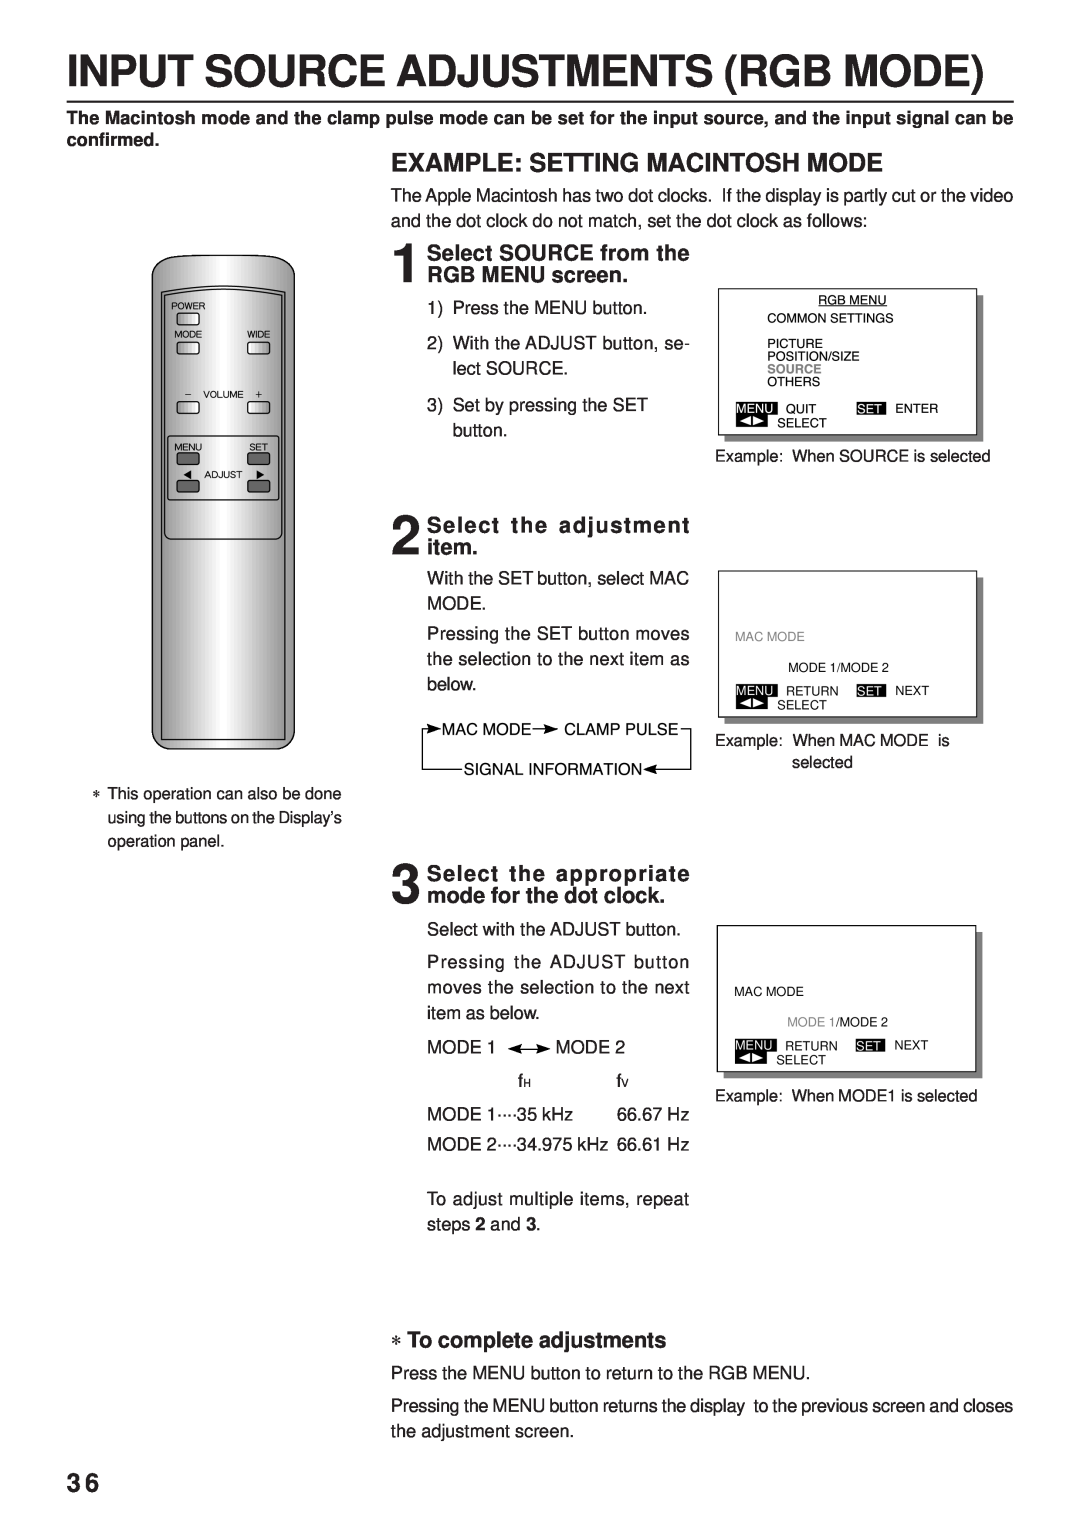 Fujitsu PDS4203W-H / PDS4203E-H user manual Input Source Adjustments Rgb Mode, Example Setting Macintosh Mode 